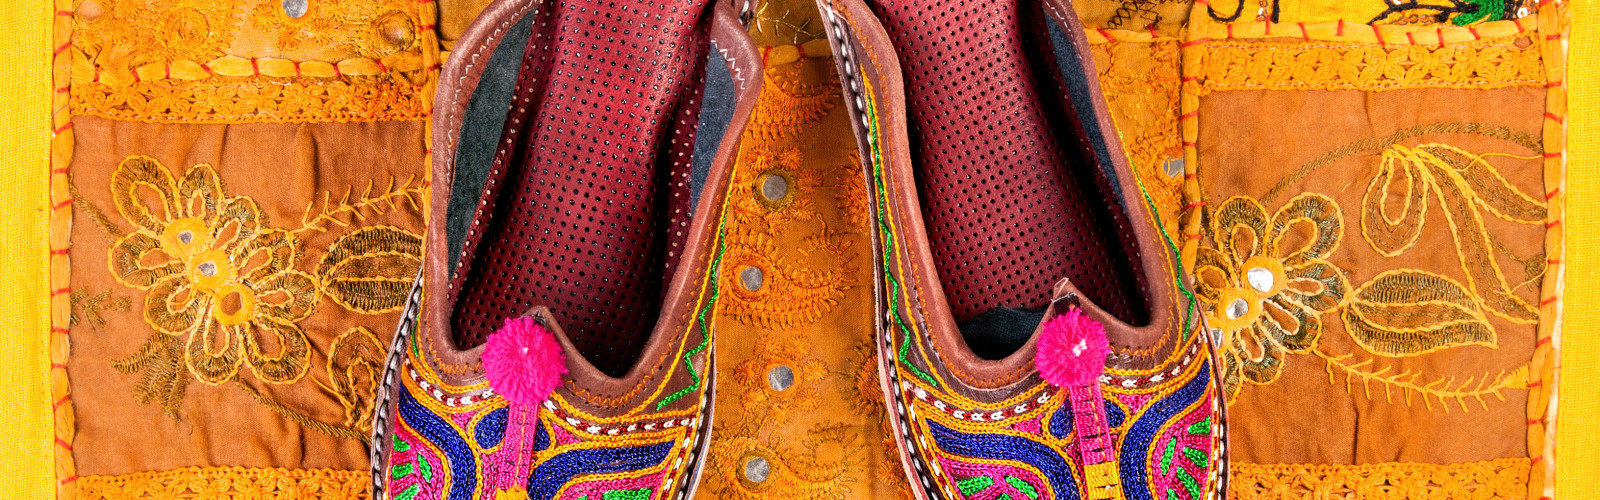 Colorful Ethinic Shoes, Jaipur, Rajasthan